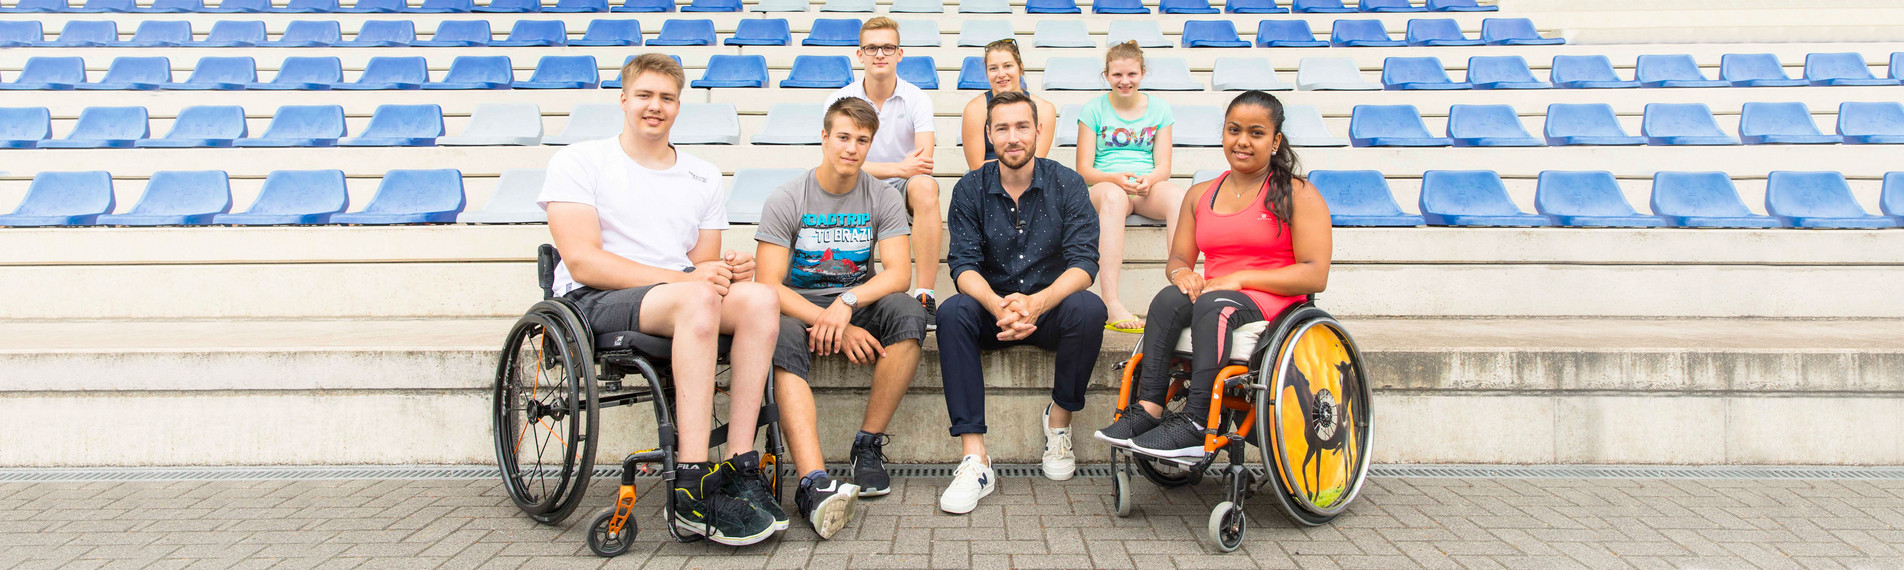 Die sechs Top-Athleten mit ZDF-Sportmoderator Sven Voss. Copyright: ZDF/Tom Trabow